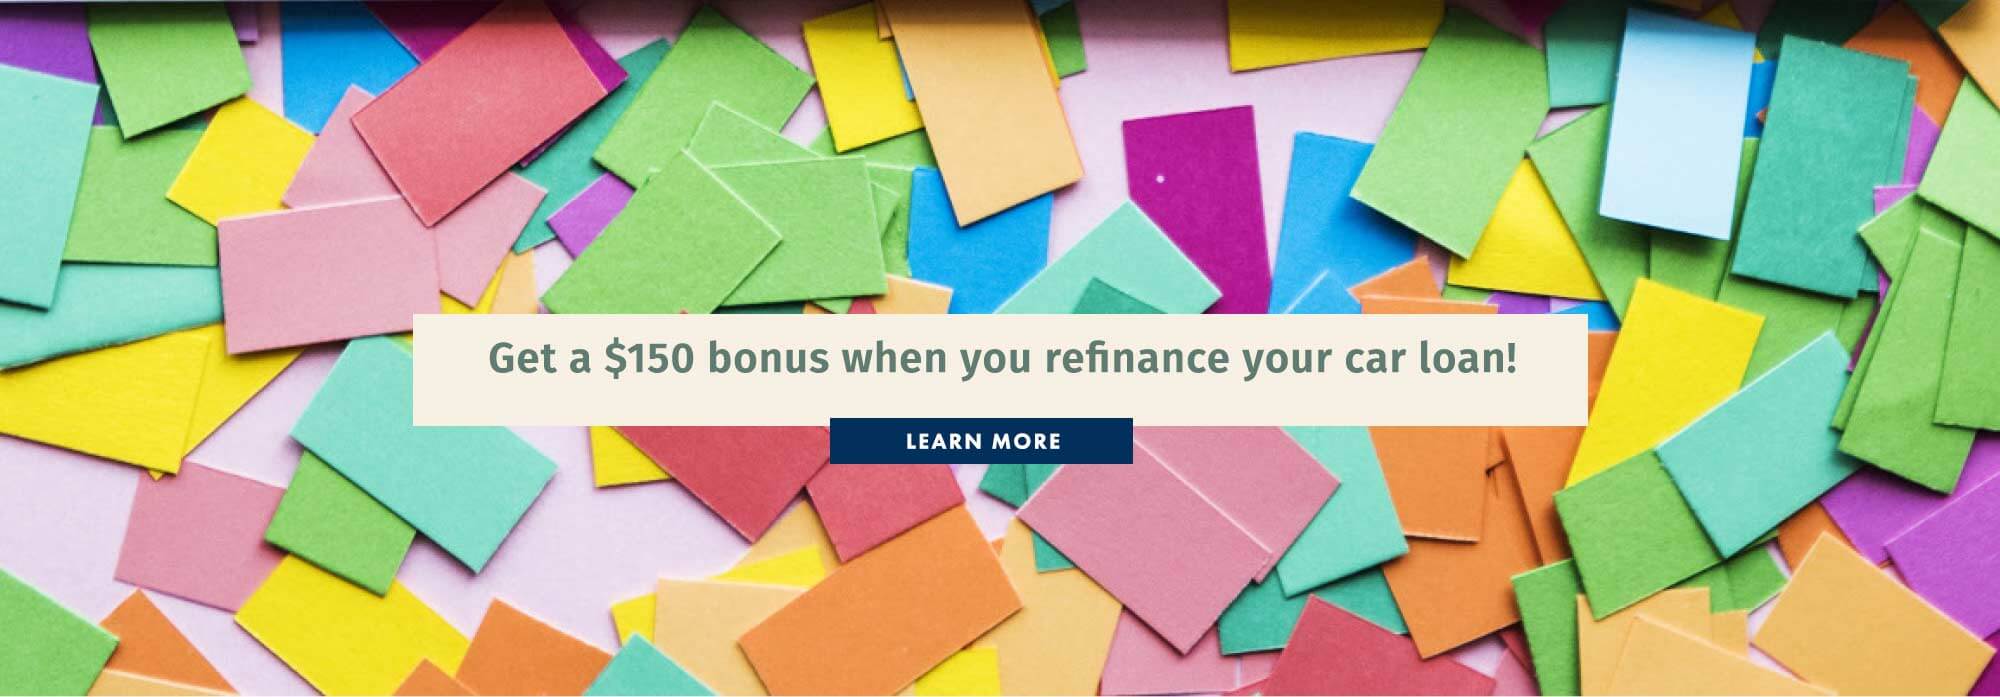 Get a $150 bonus when you refinance your car loan!